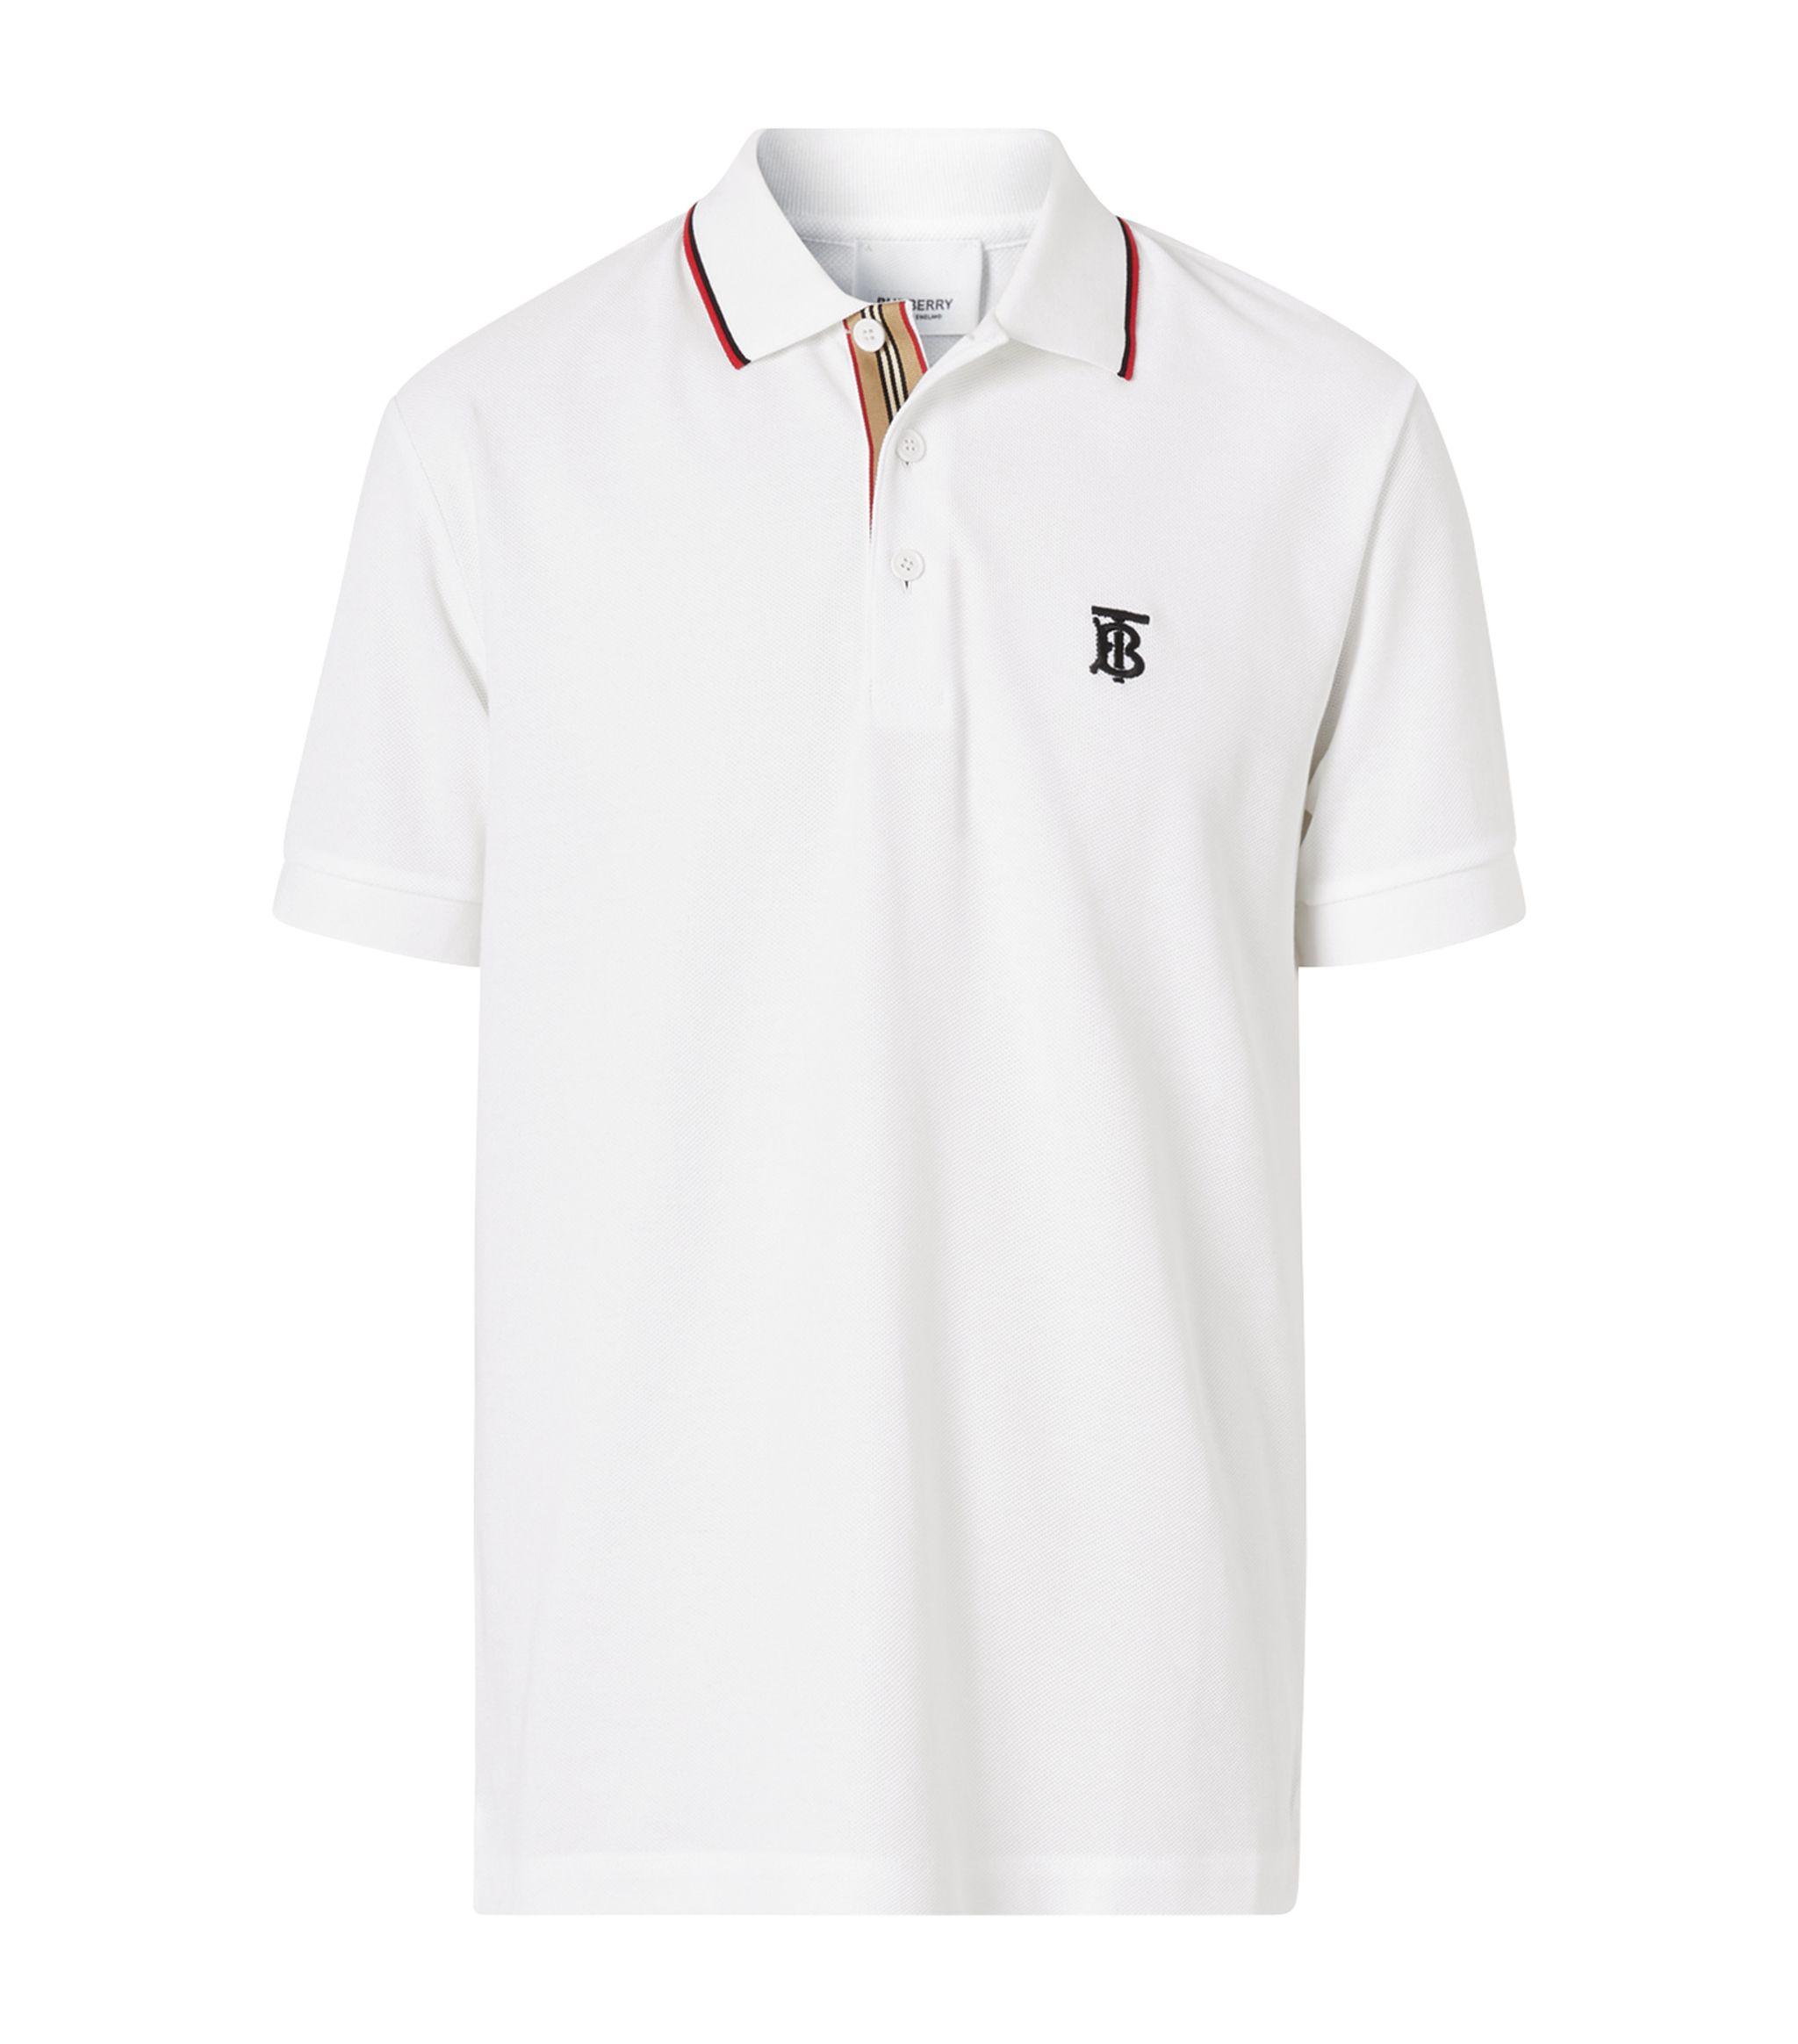 Burberry Cotton Tb Monogram Polo Shirt in White for Men - Lyst